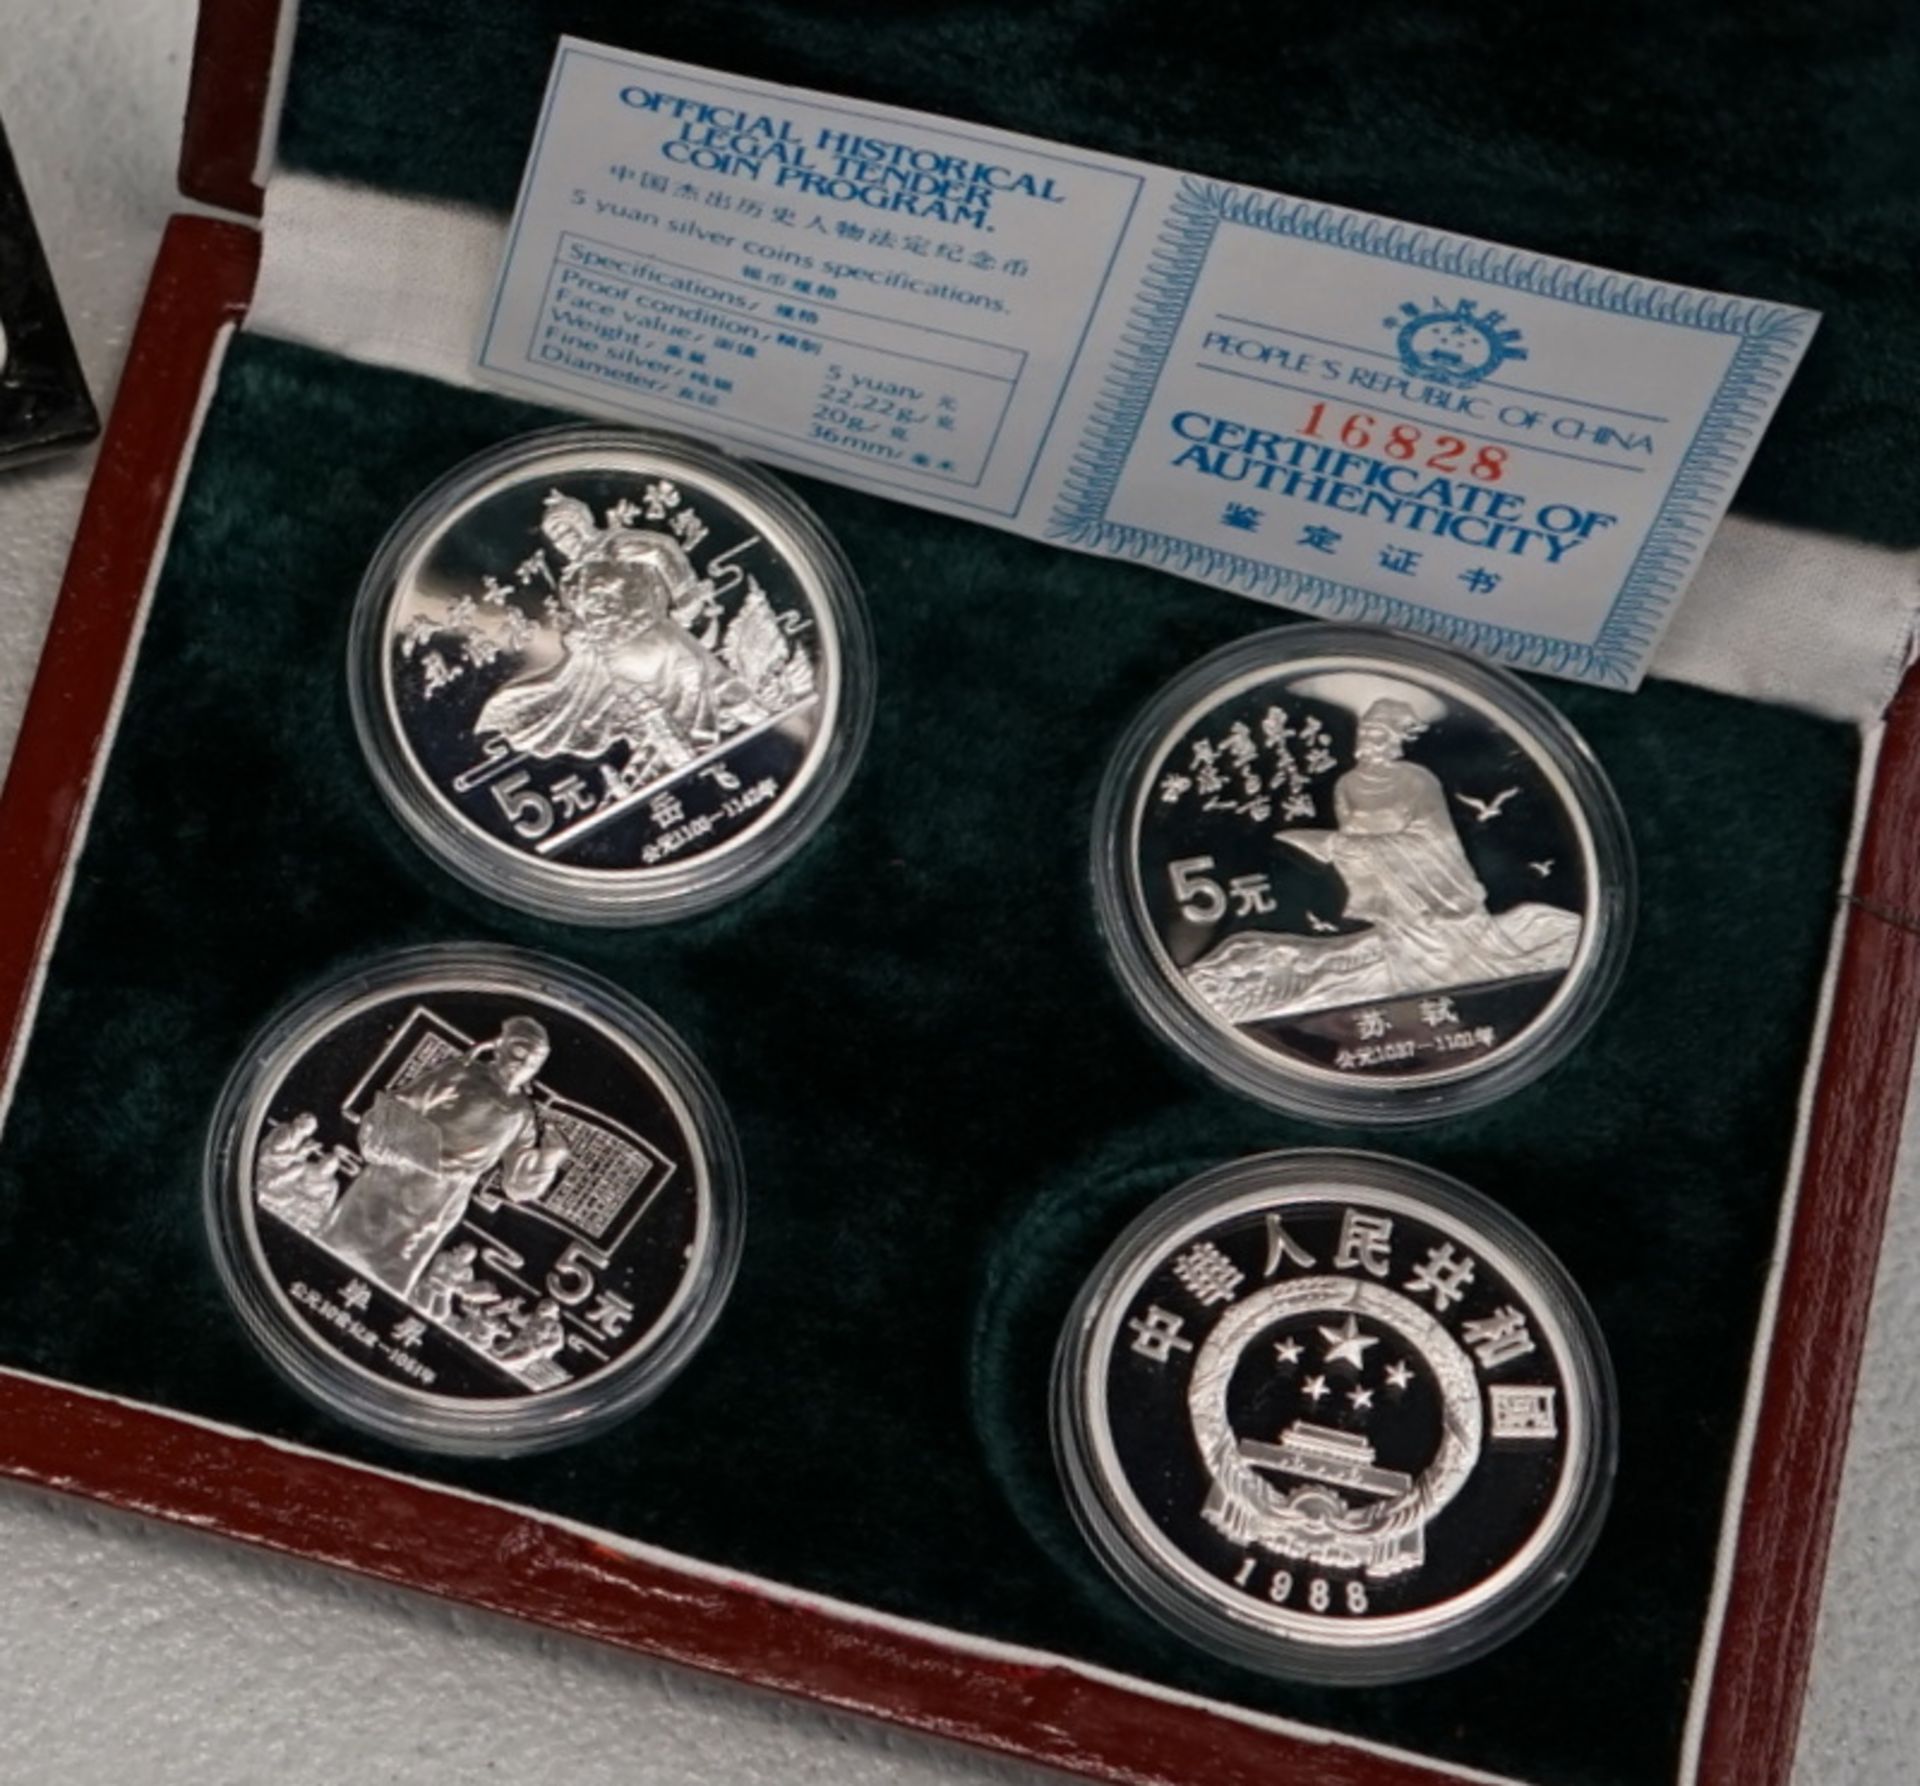 12 Münzen, Silber, China, 5 Yuan, 1986, 1987, 1988,jeweils 4x 1986,1987, 1988, 5 Yuan, Durchmesser - Image 3 of 3